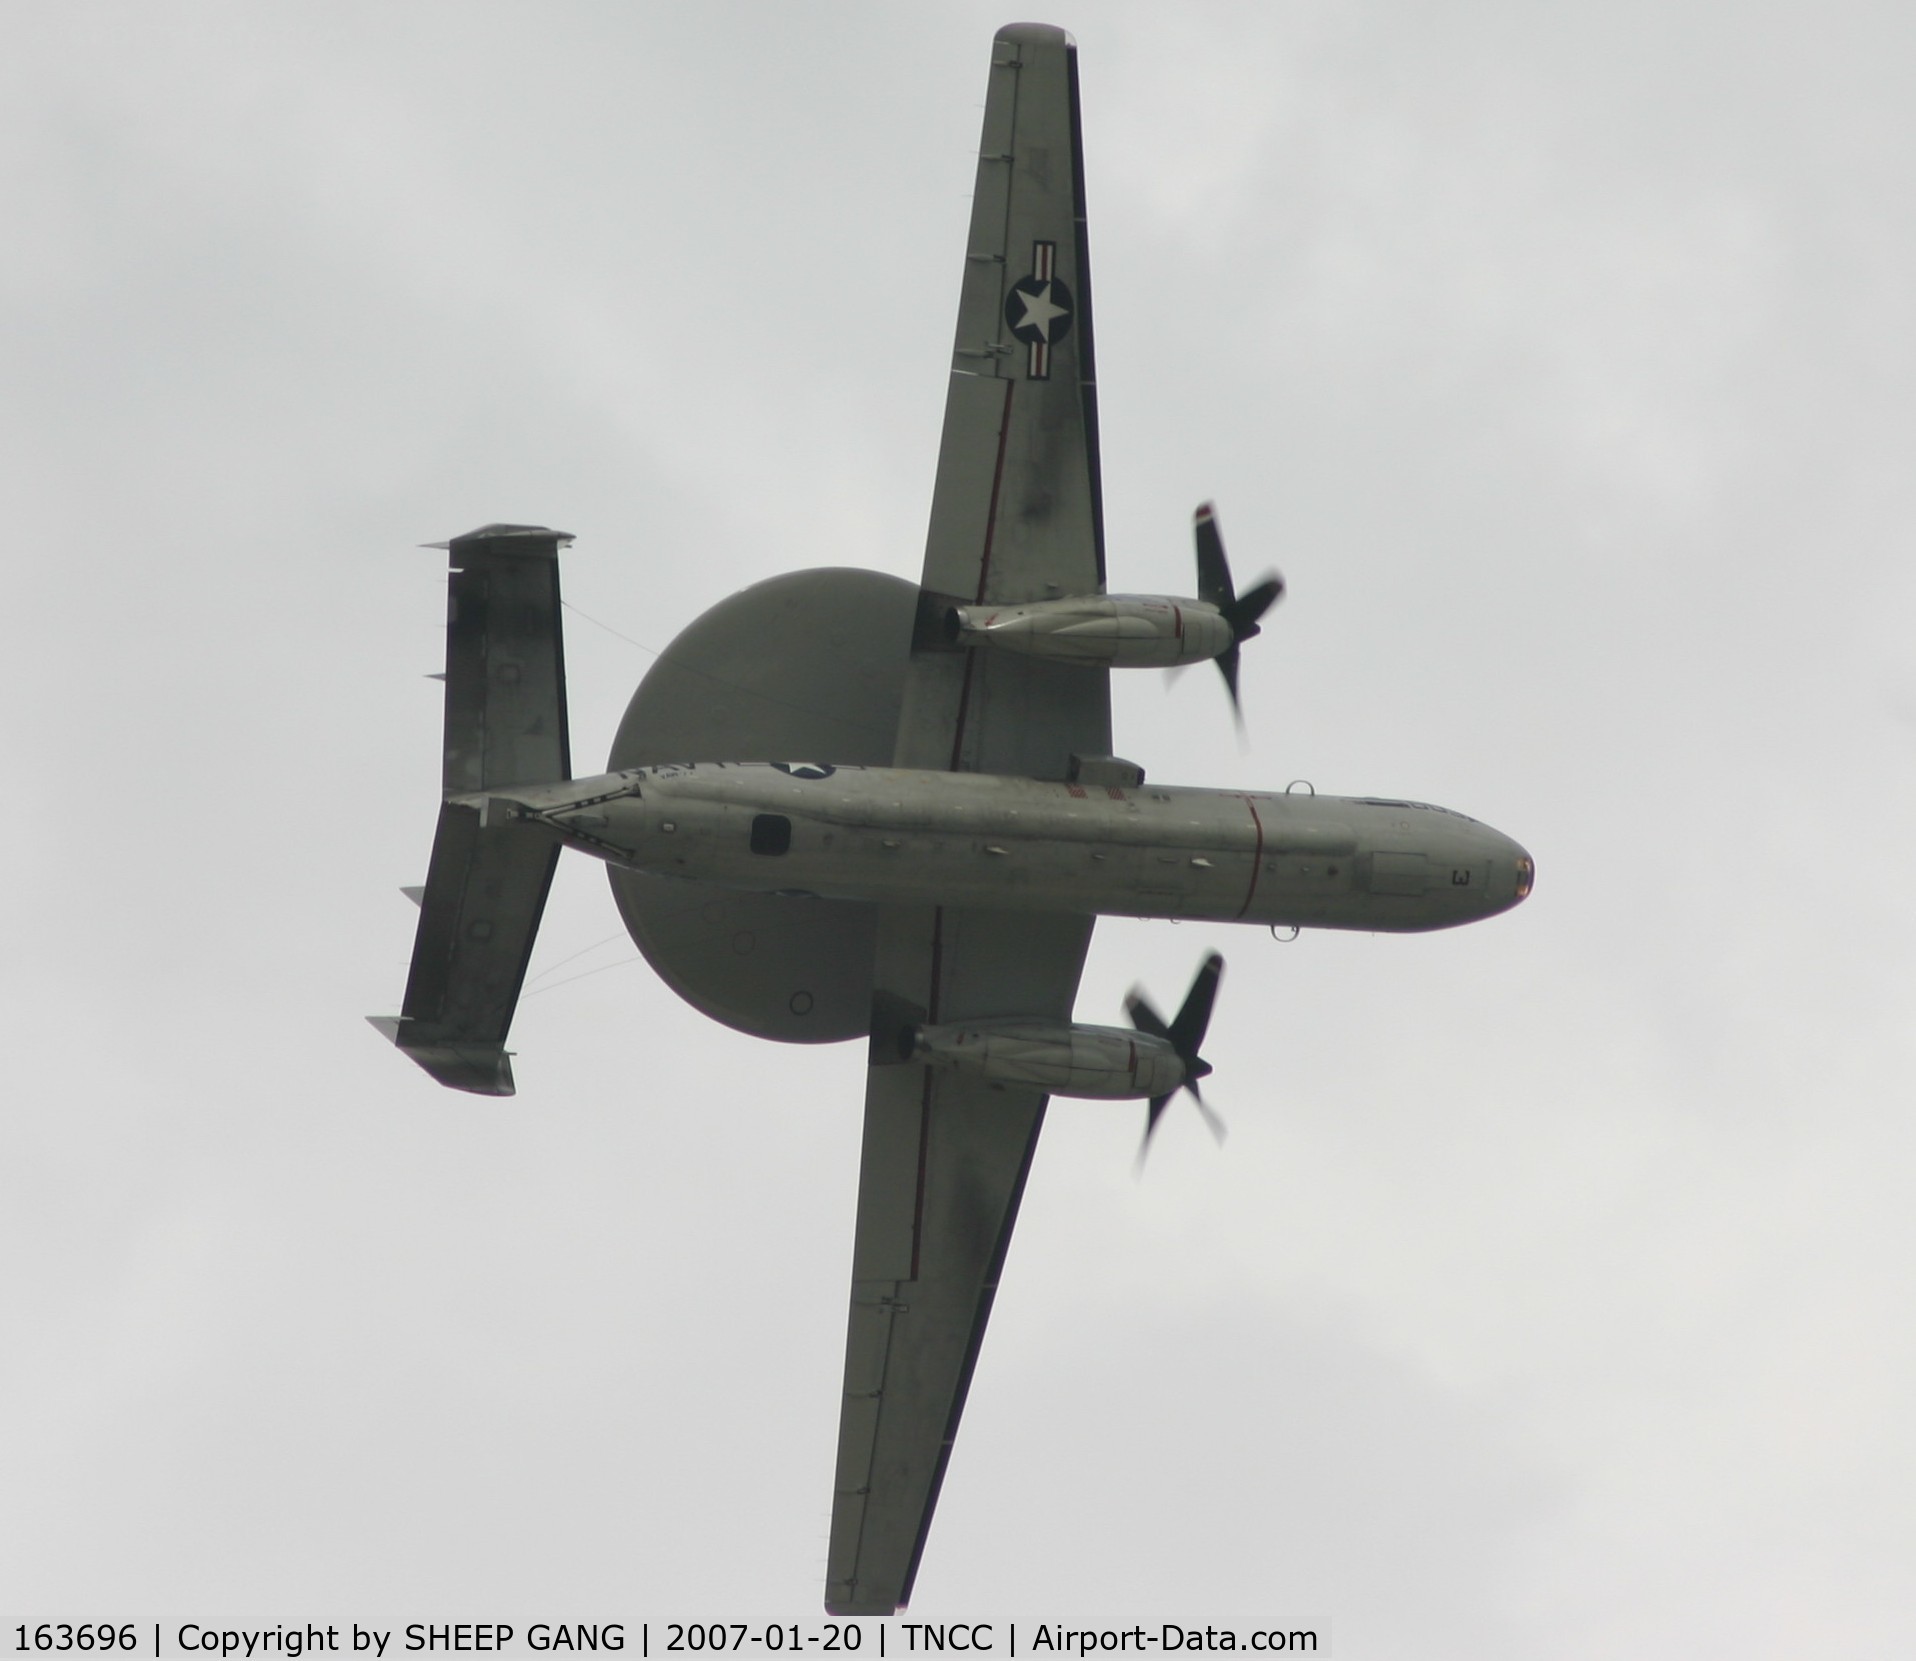 163696, Grumman E-2C Hawkeye Group 1 C/N A132, here we have them doing a sharp left turn back to final